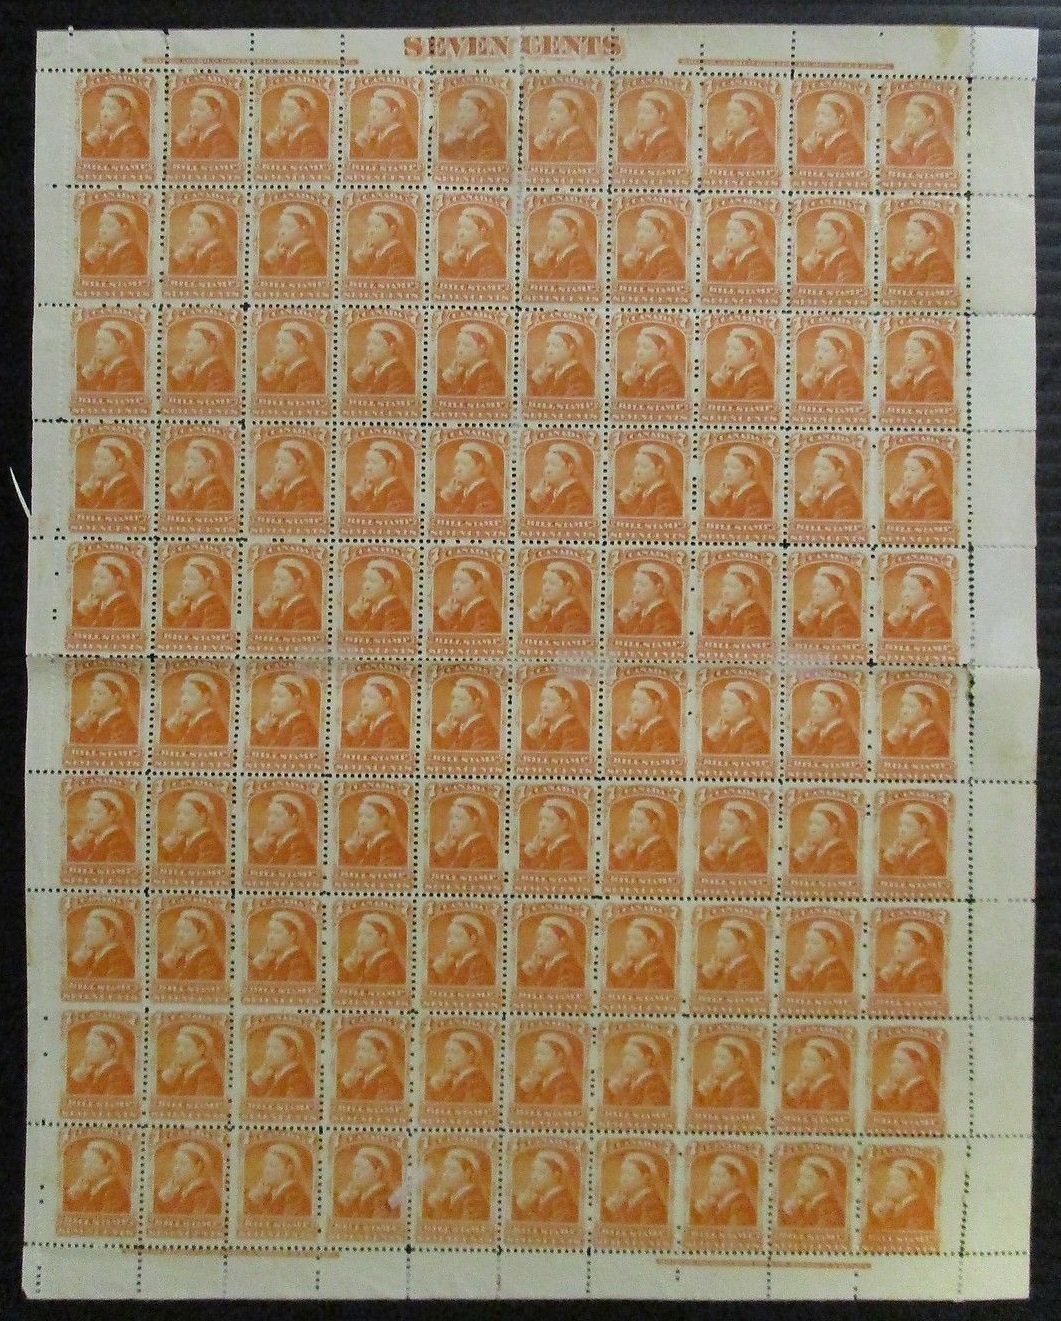 0044FB1708 - FB44 - Mint Sheet of 100